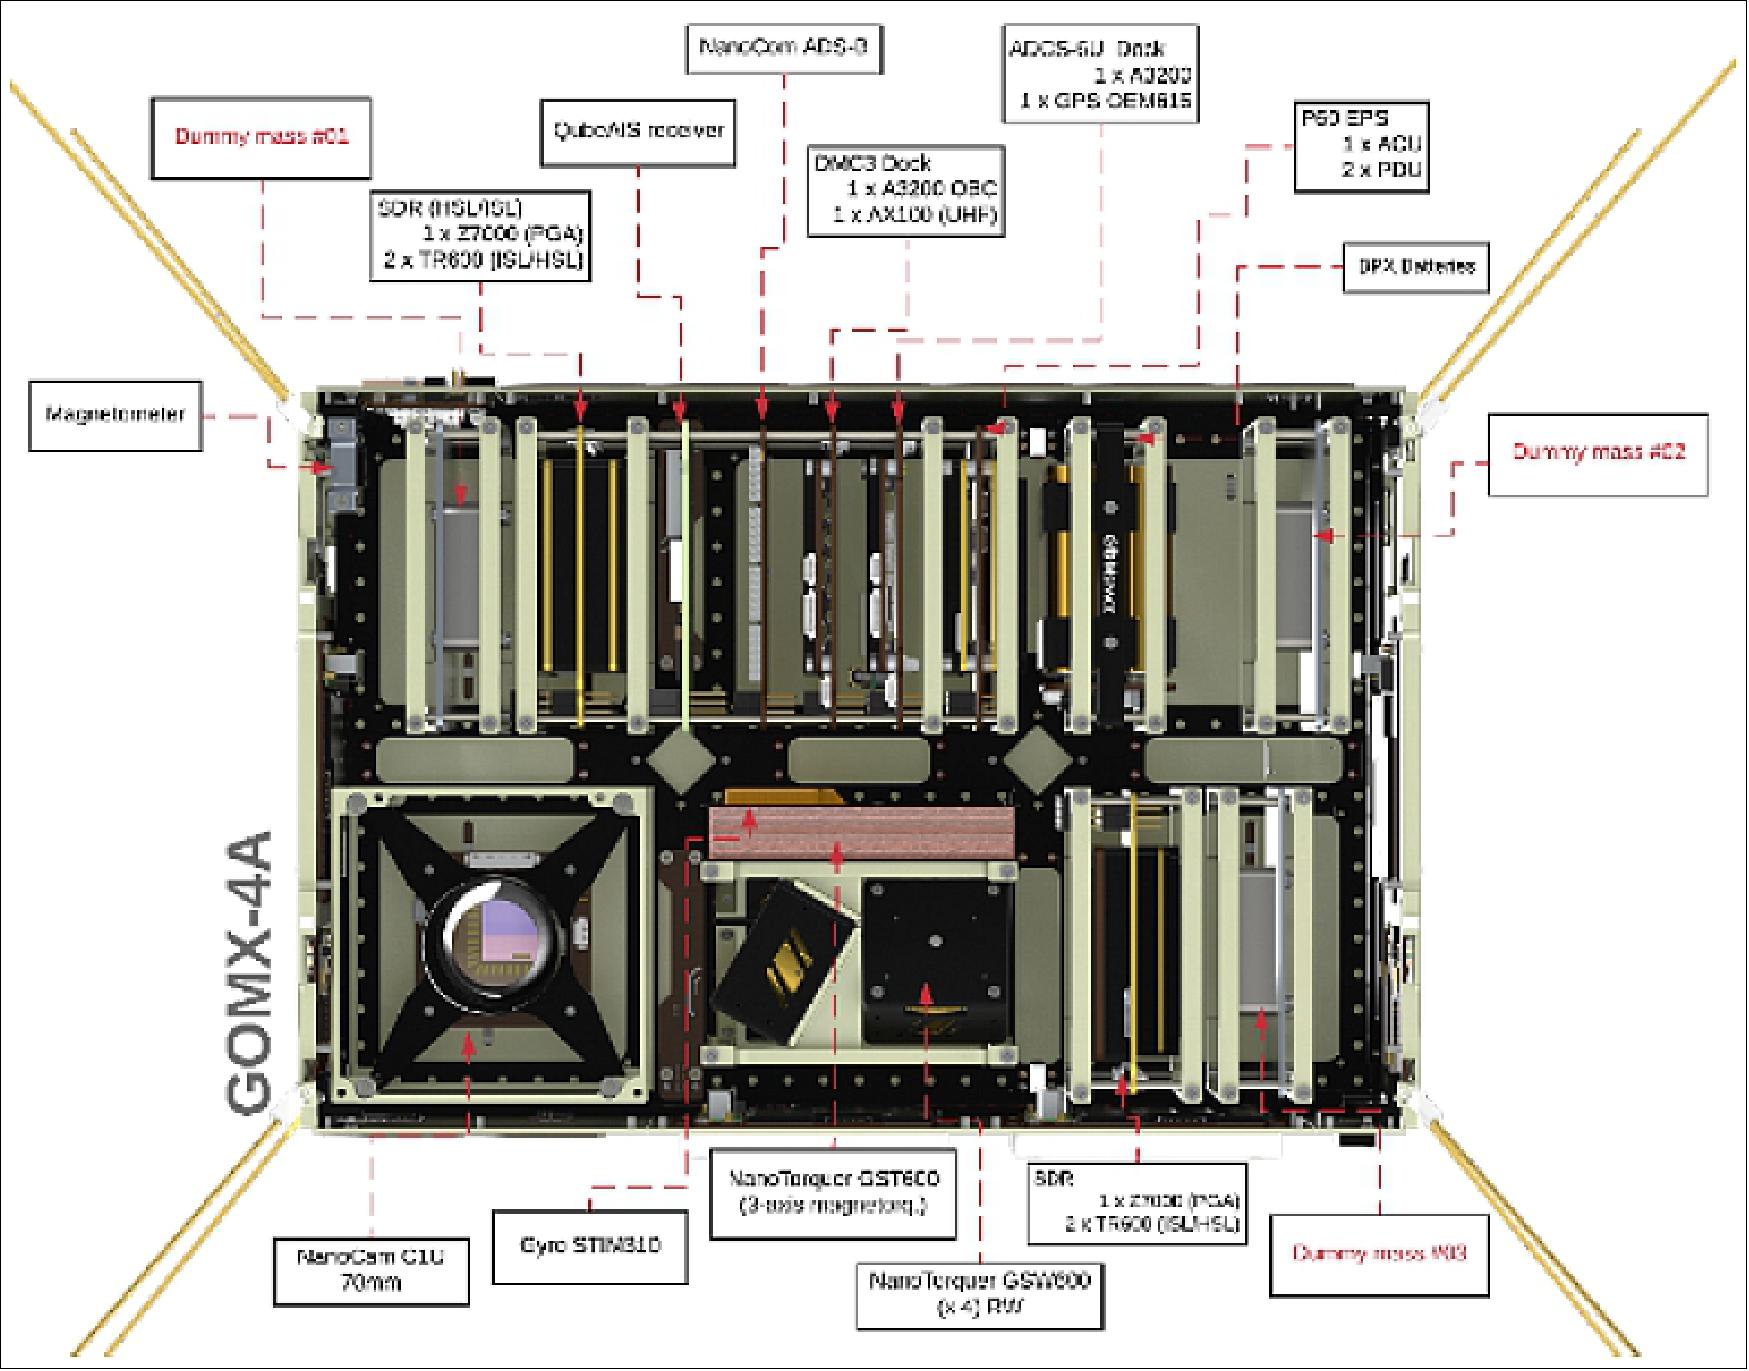 Figure 2: GomX-4A internal layout (image credit: GomSpace)